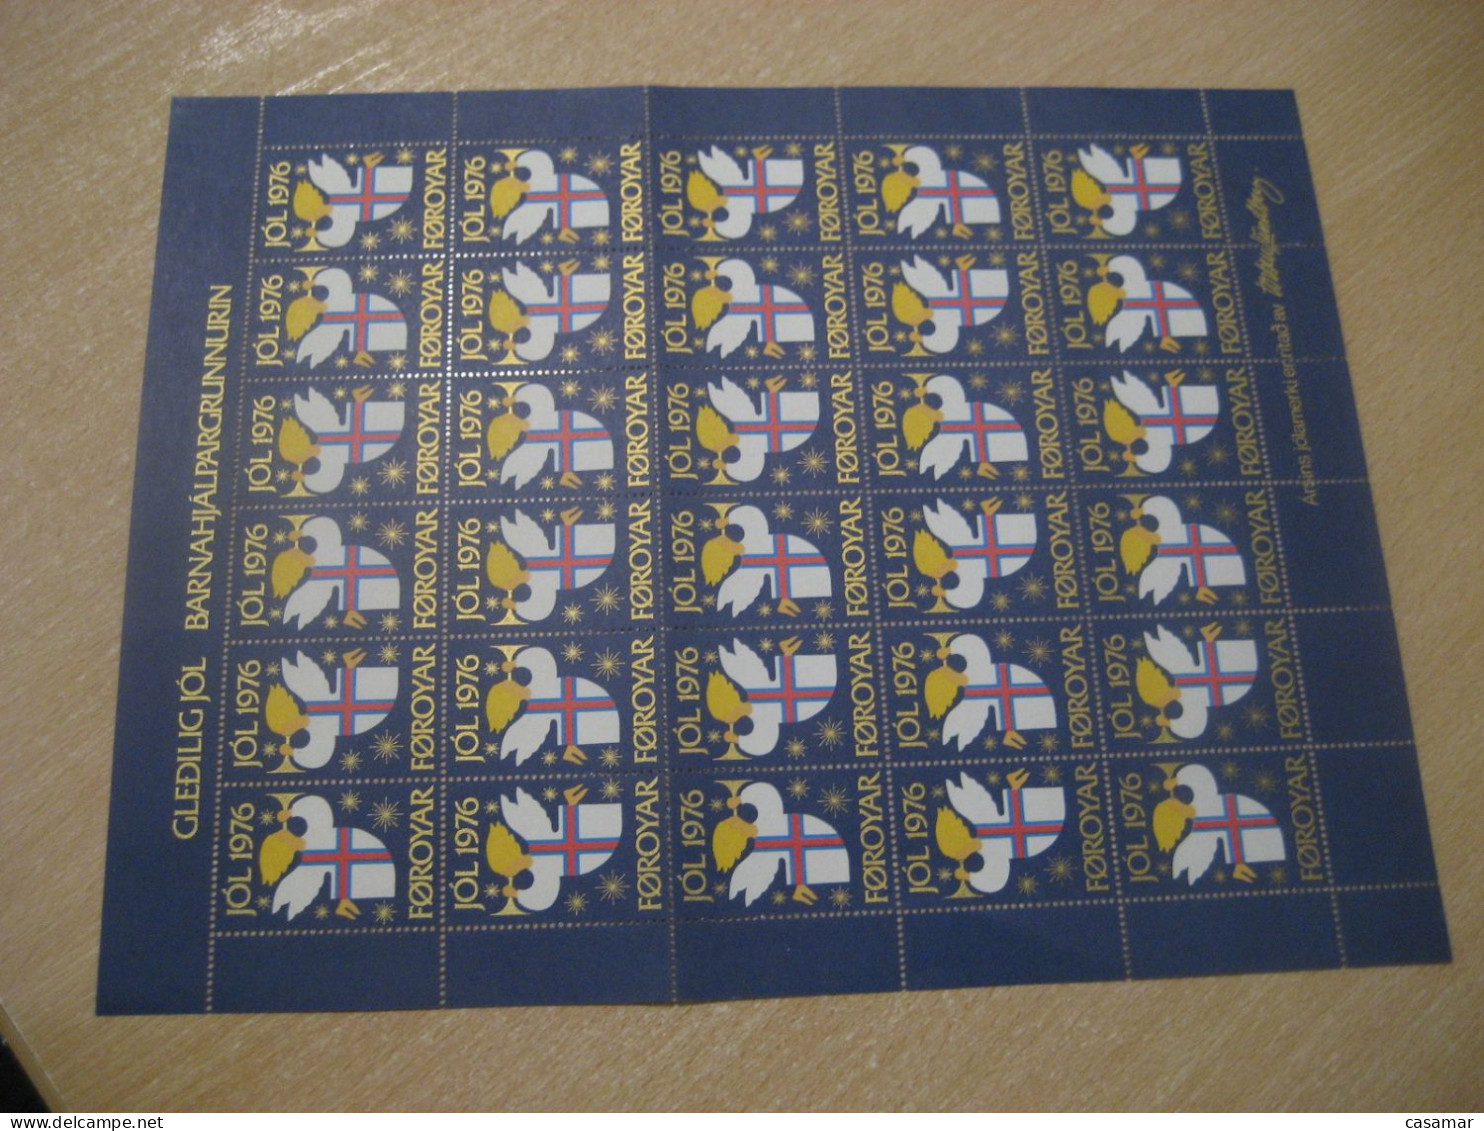 FAROE ISLANDS 1976 Flag Merry Christmas Sheet Bloc 30 Poster Stamp Vignette DENMARK Label Children Aid - Faeroër